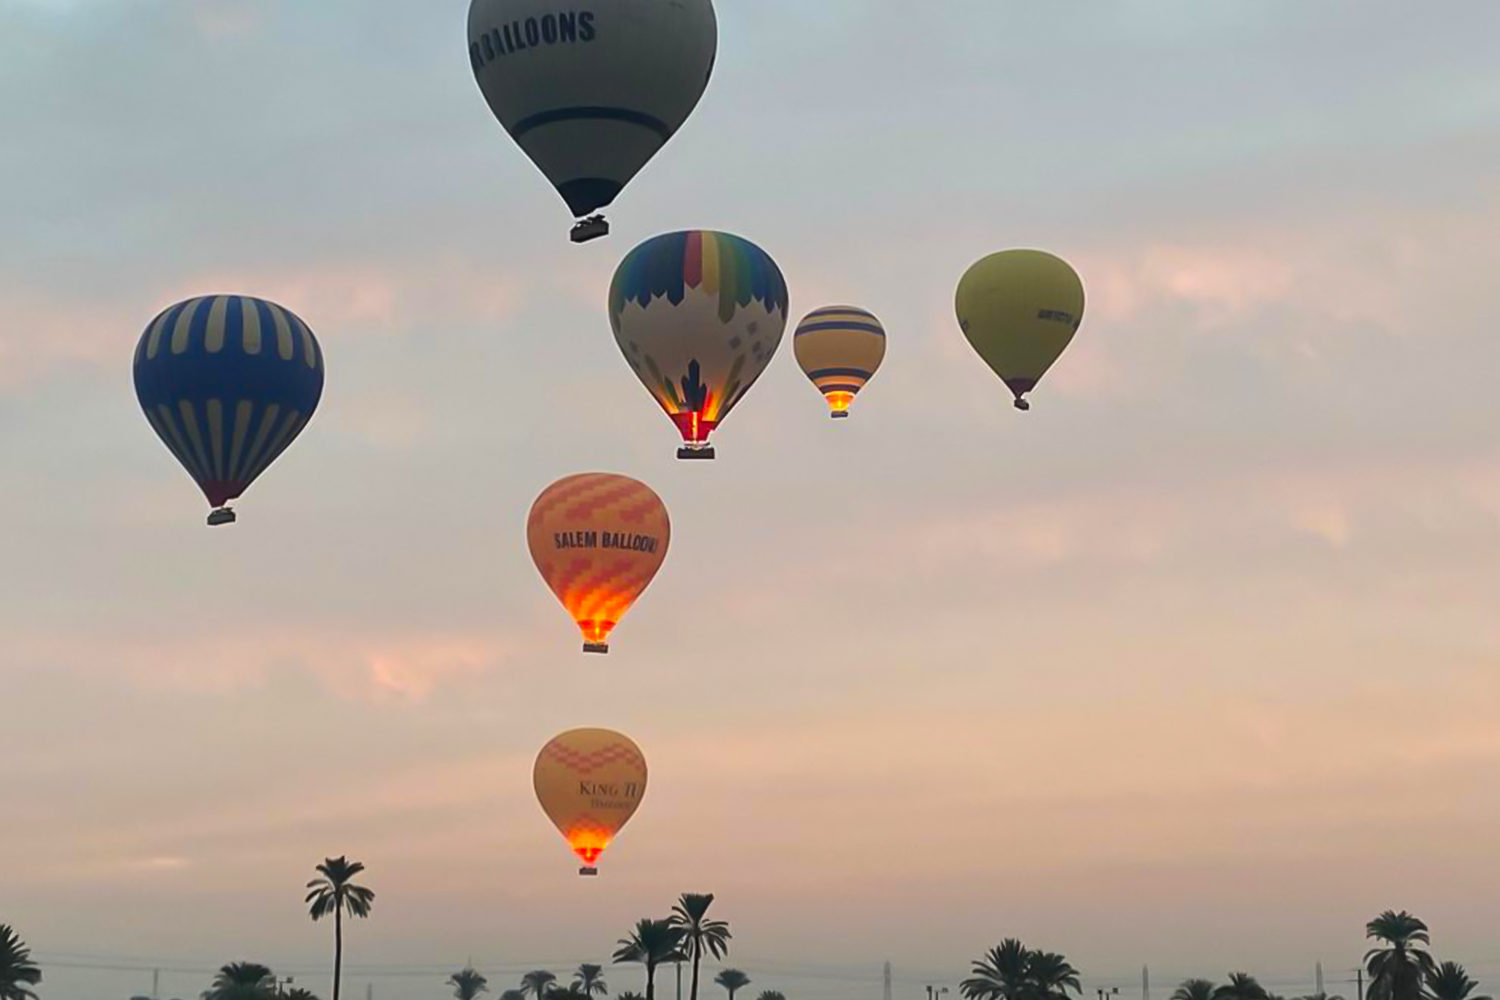 From Marsa Alam Luxor Highlights & Hot Air Balloon Ride Details